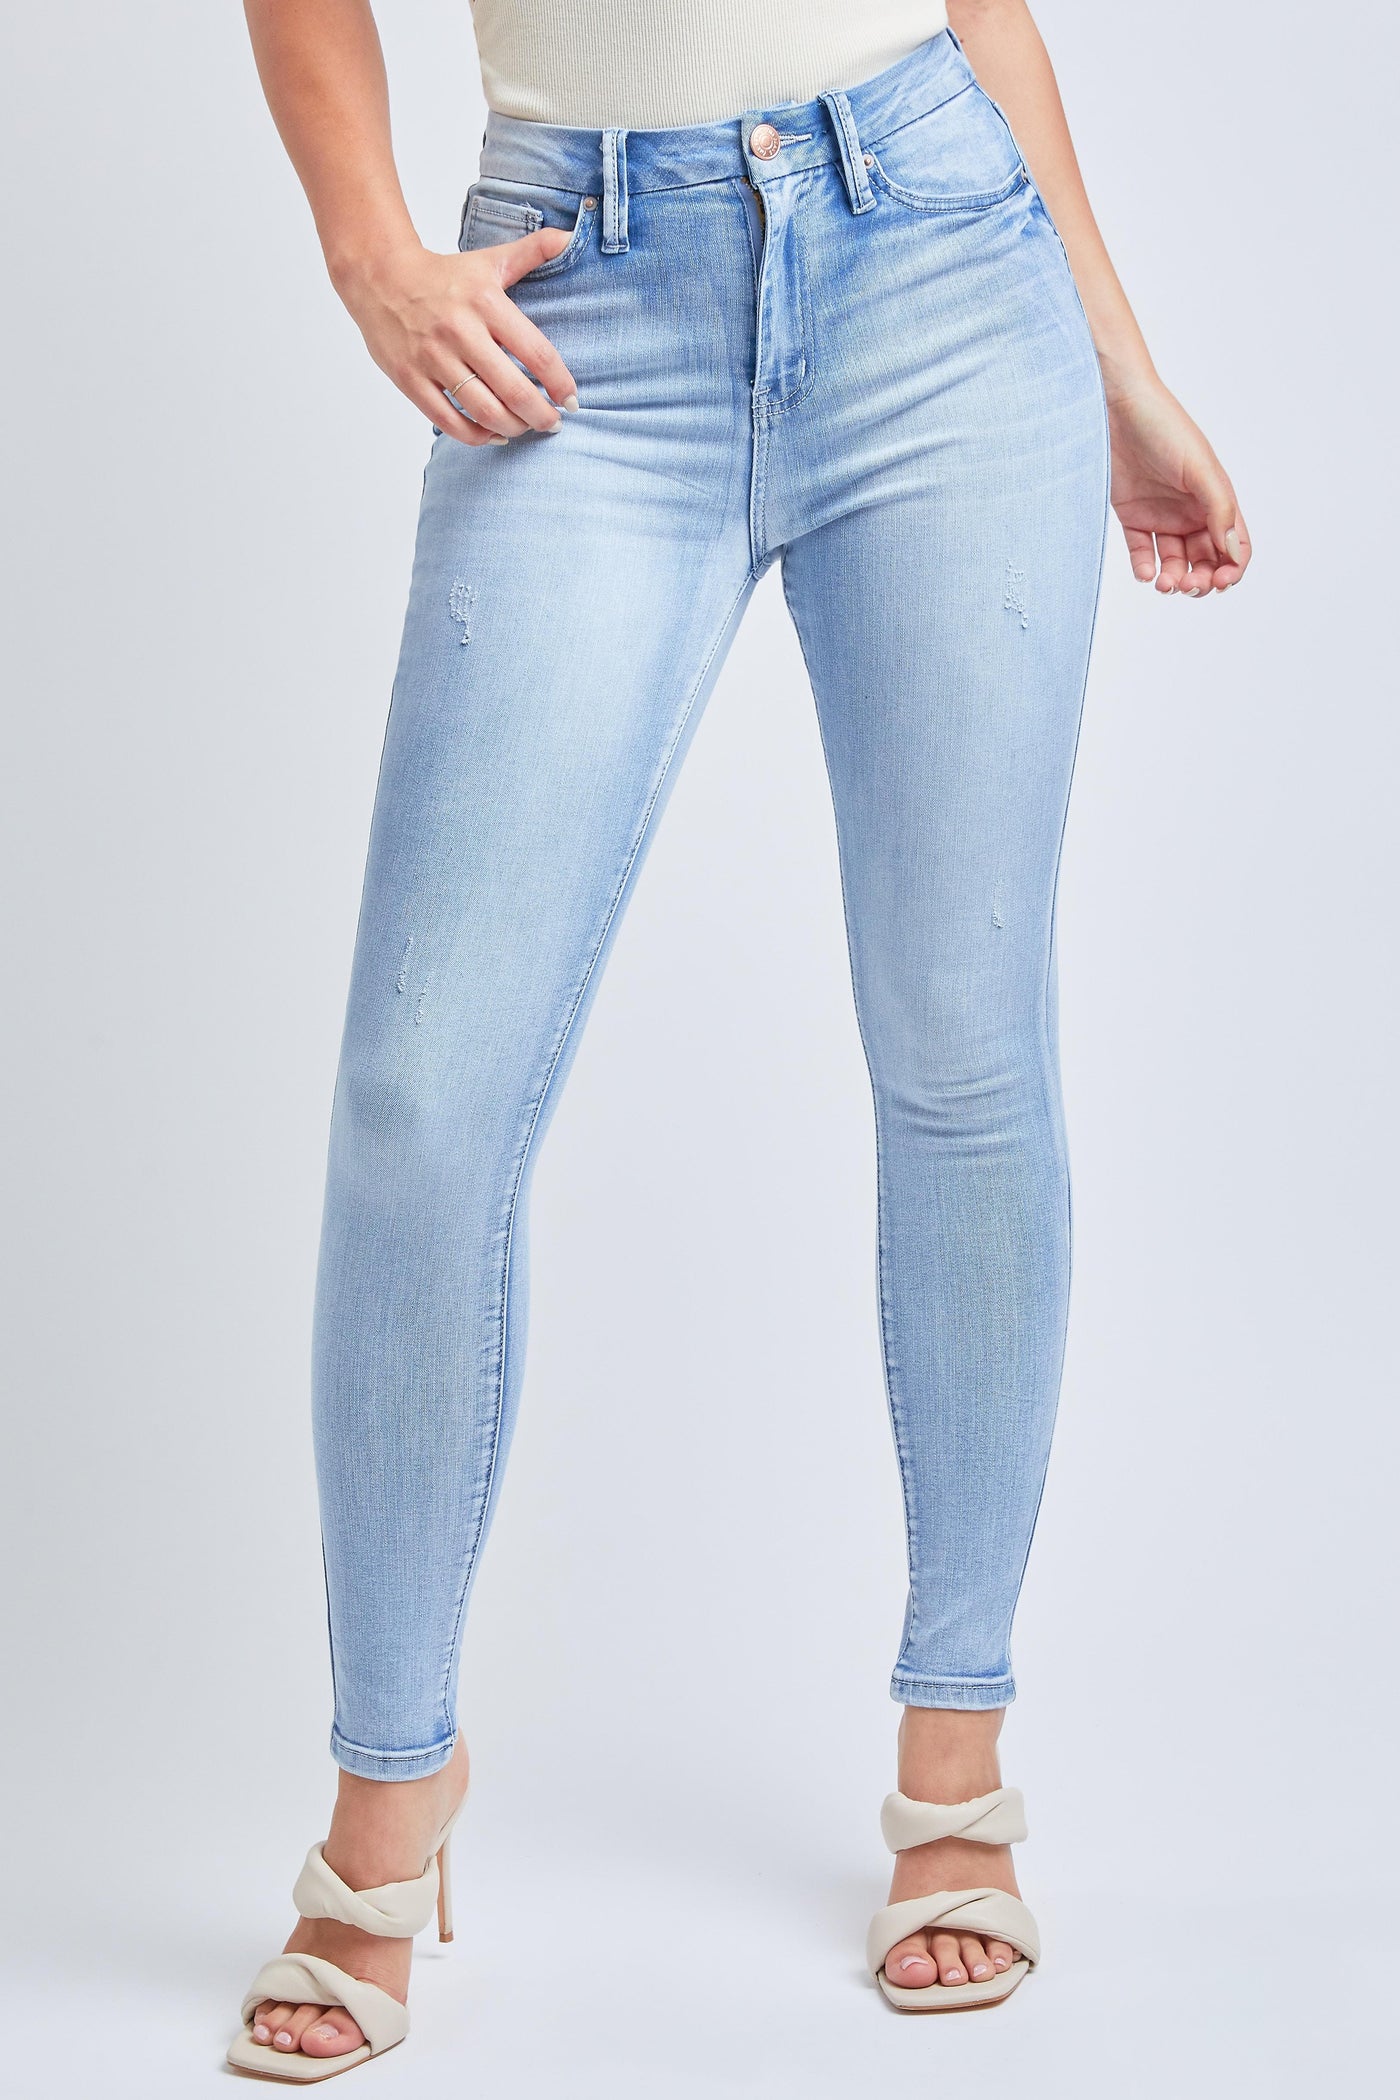 Fit YMI Jeans-sale from Curvy JEANS Women\'s YMI – Skinny